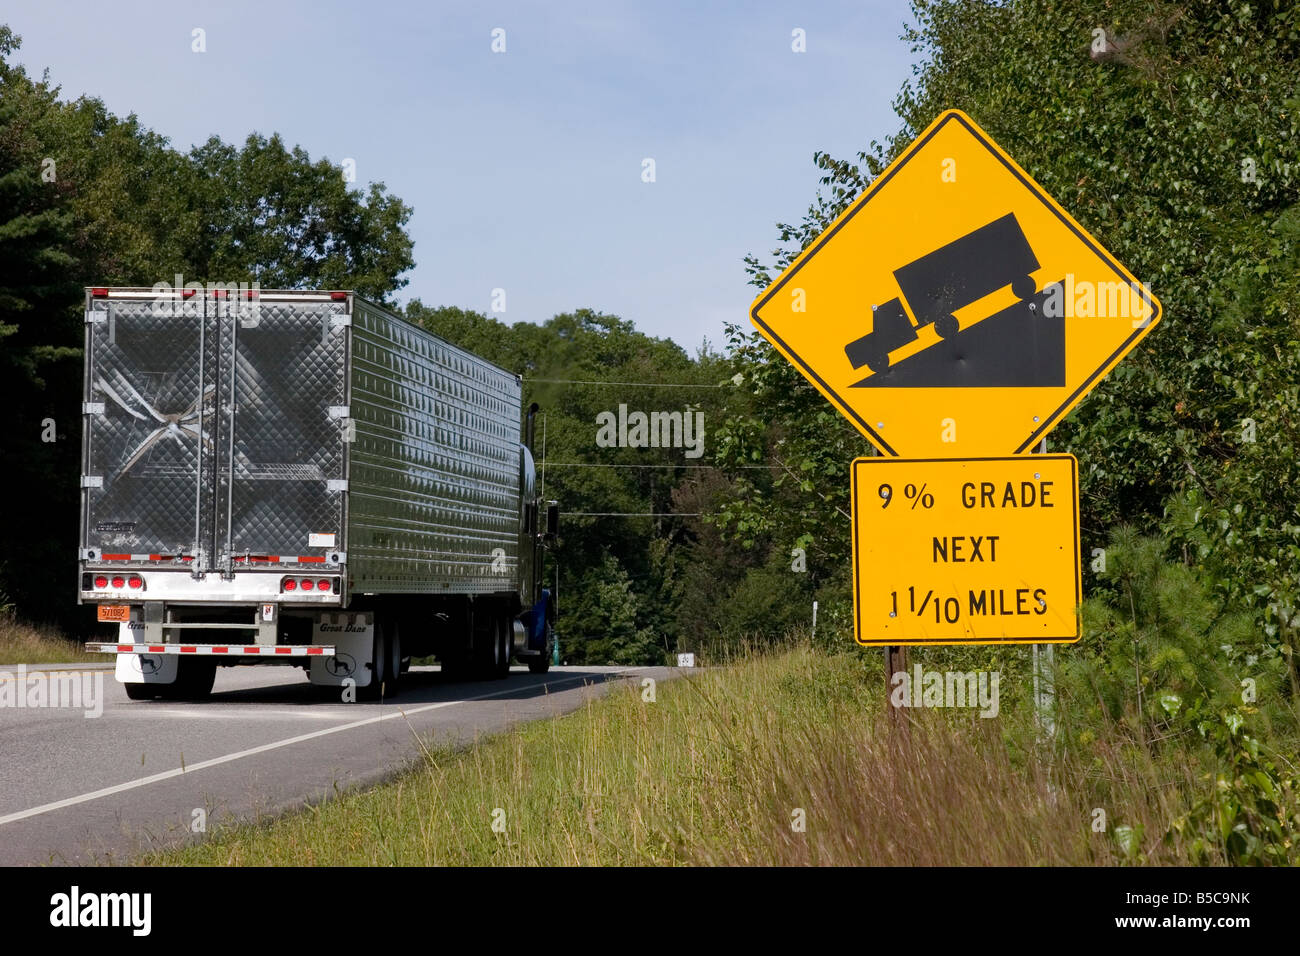 Why is USA road signage so terrible? - Road Trips Forum - TripAdvisor